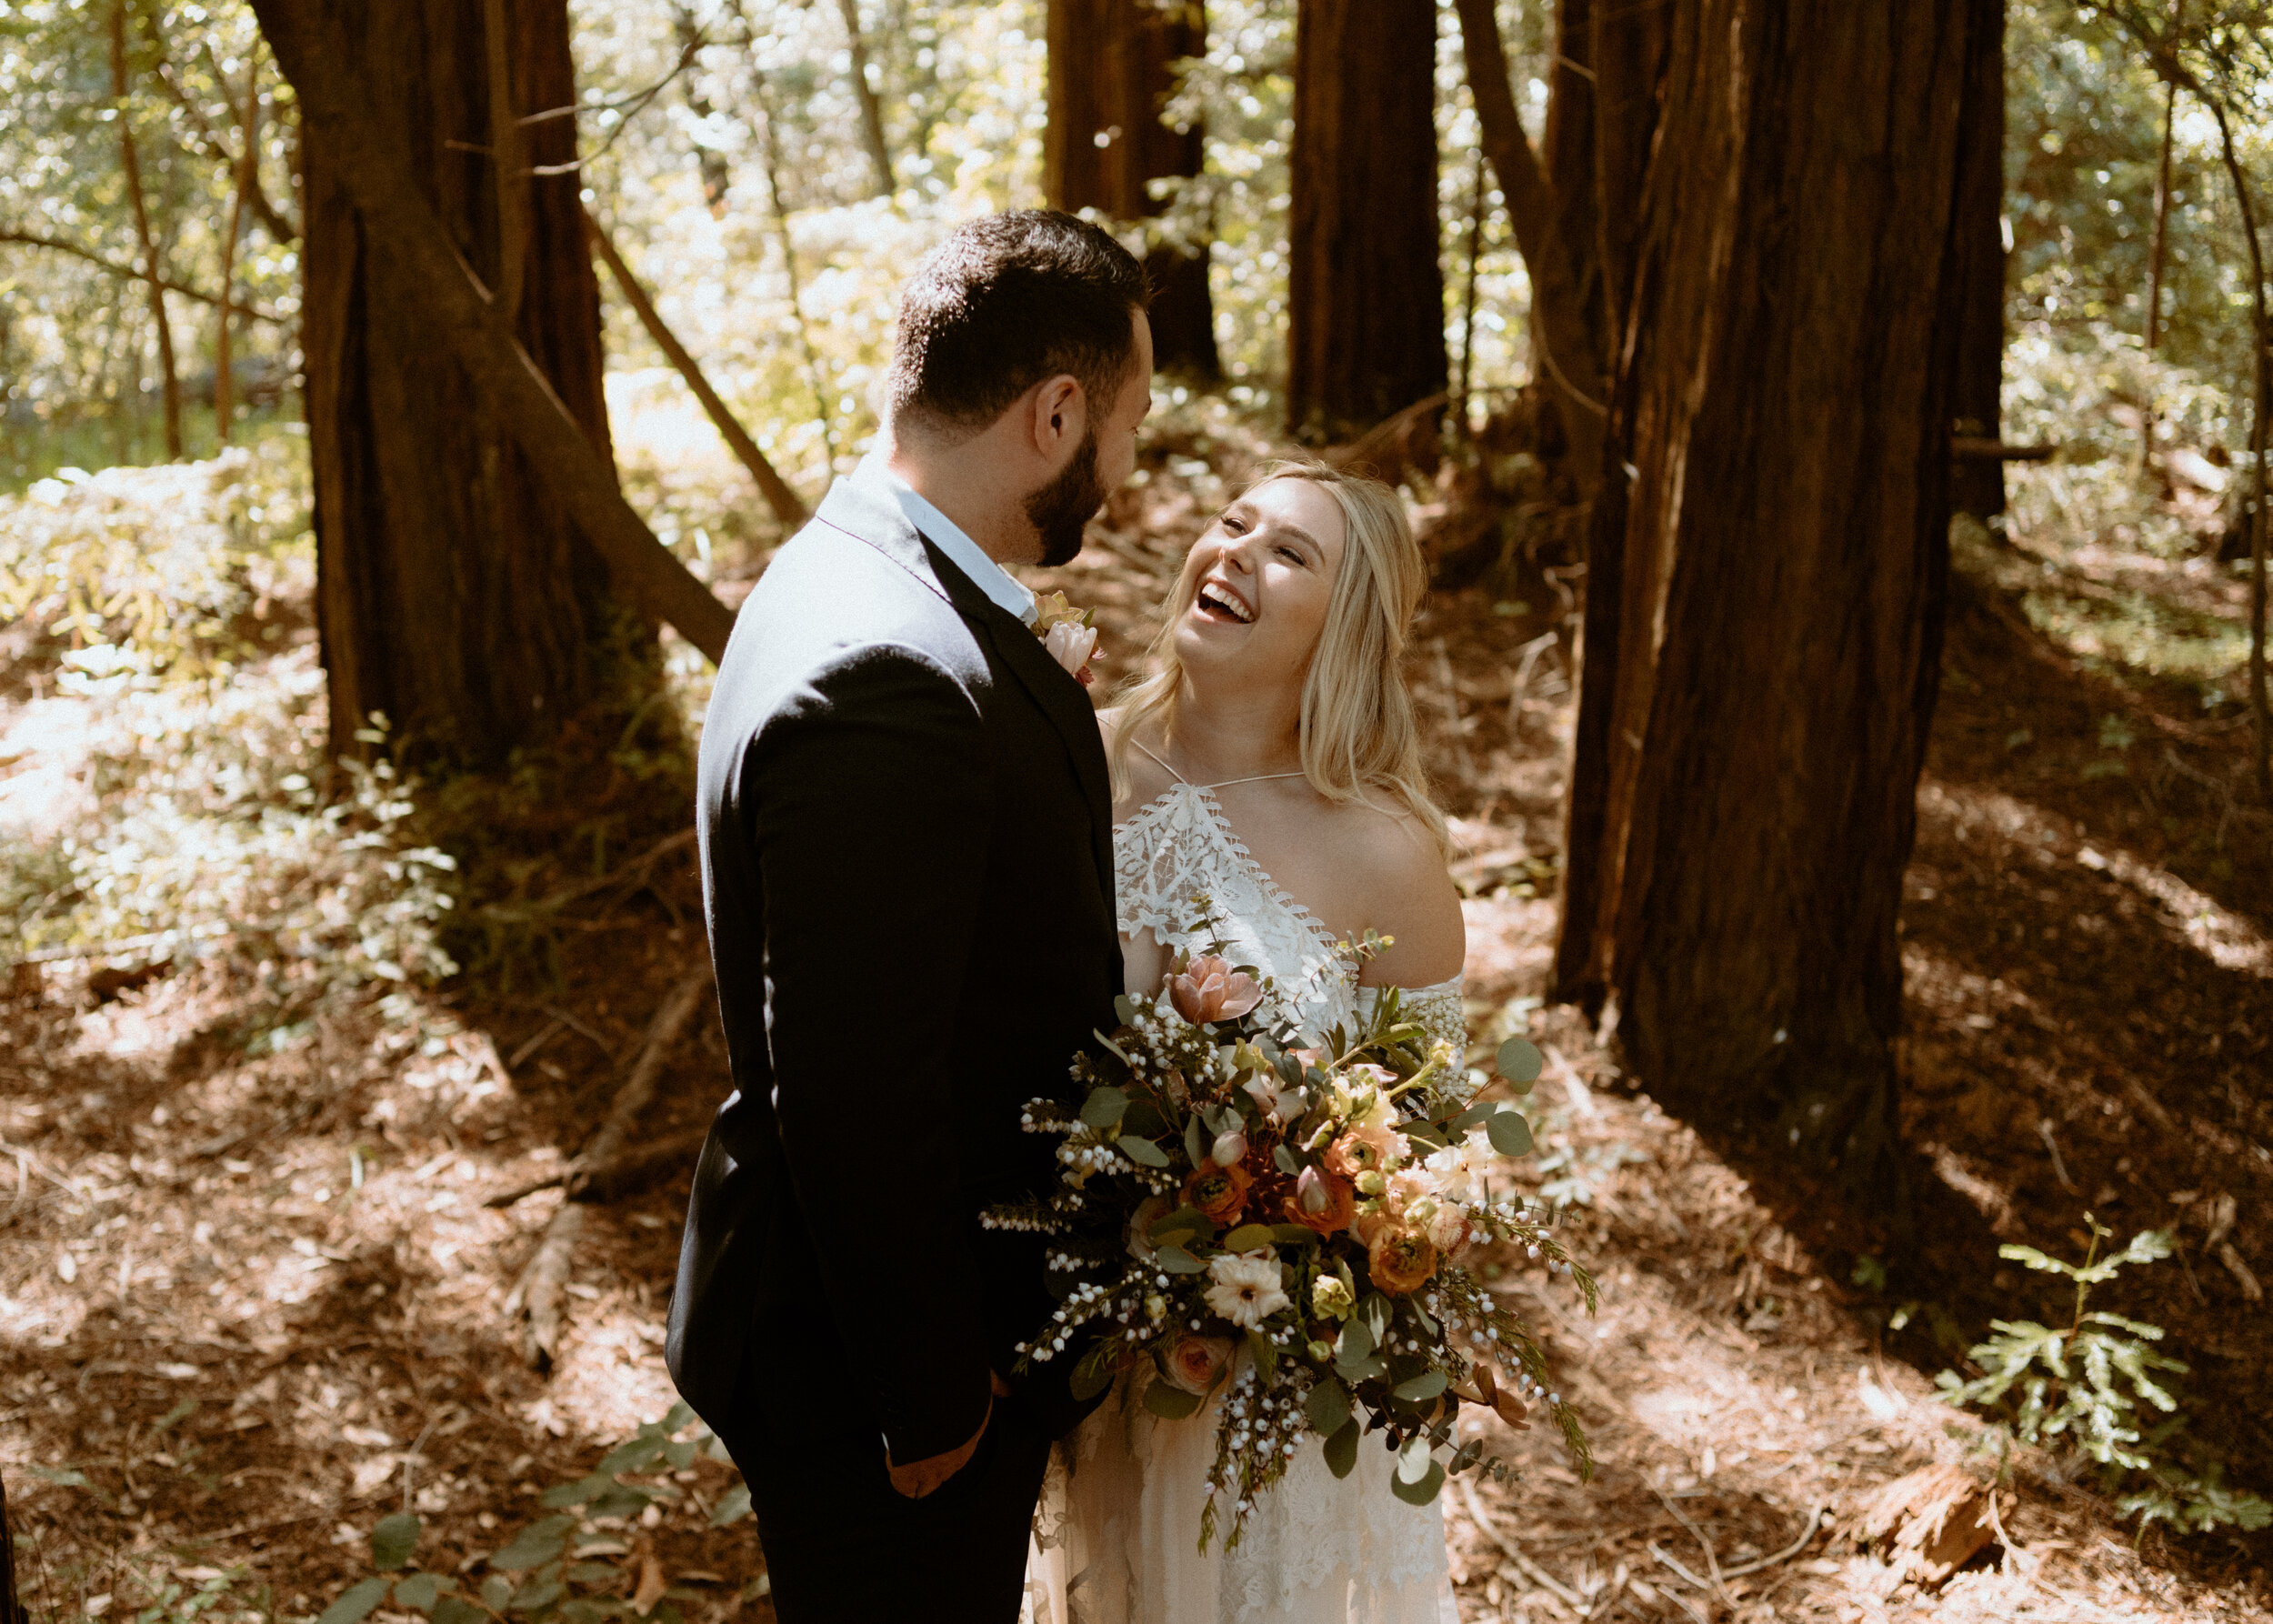 Big Sur Elopement | Redwoods Wedding | Elopement in Forest | Rue De Seine Boho Wedding Dress | Big Sur State Park Adventure Elopement | Destination Elopement